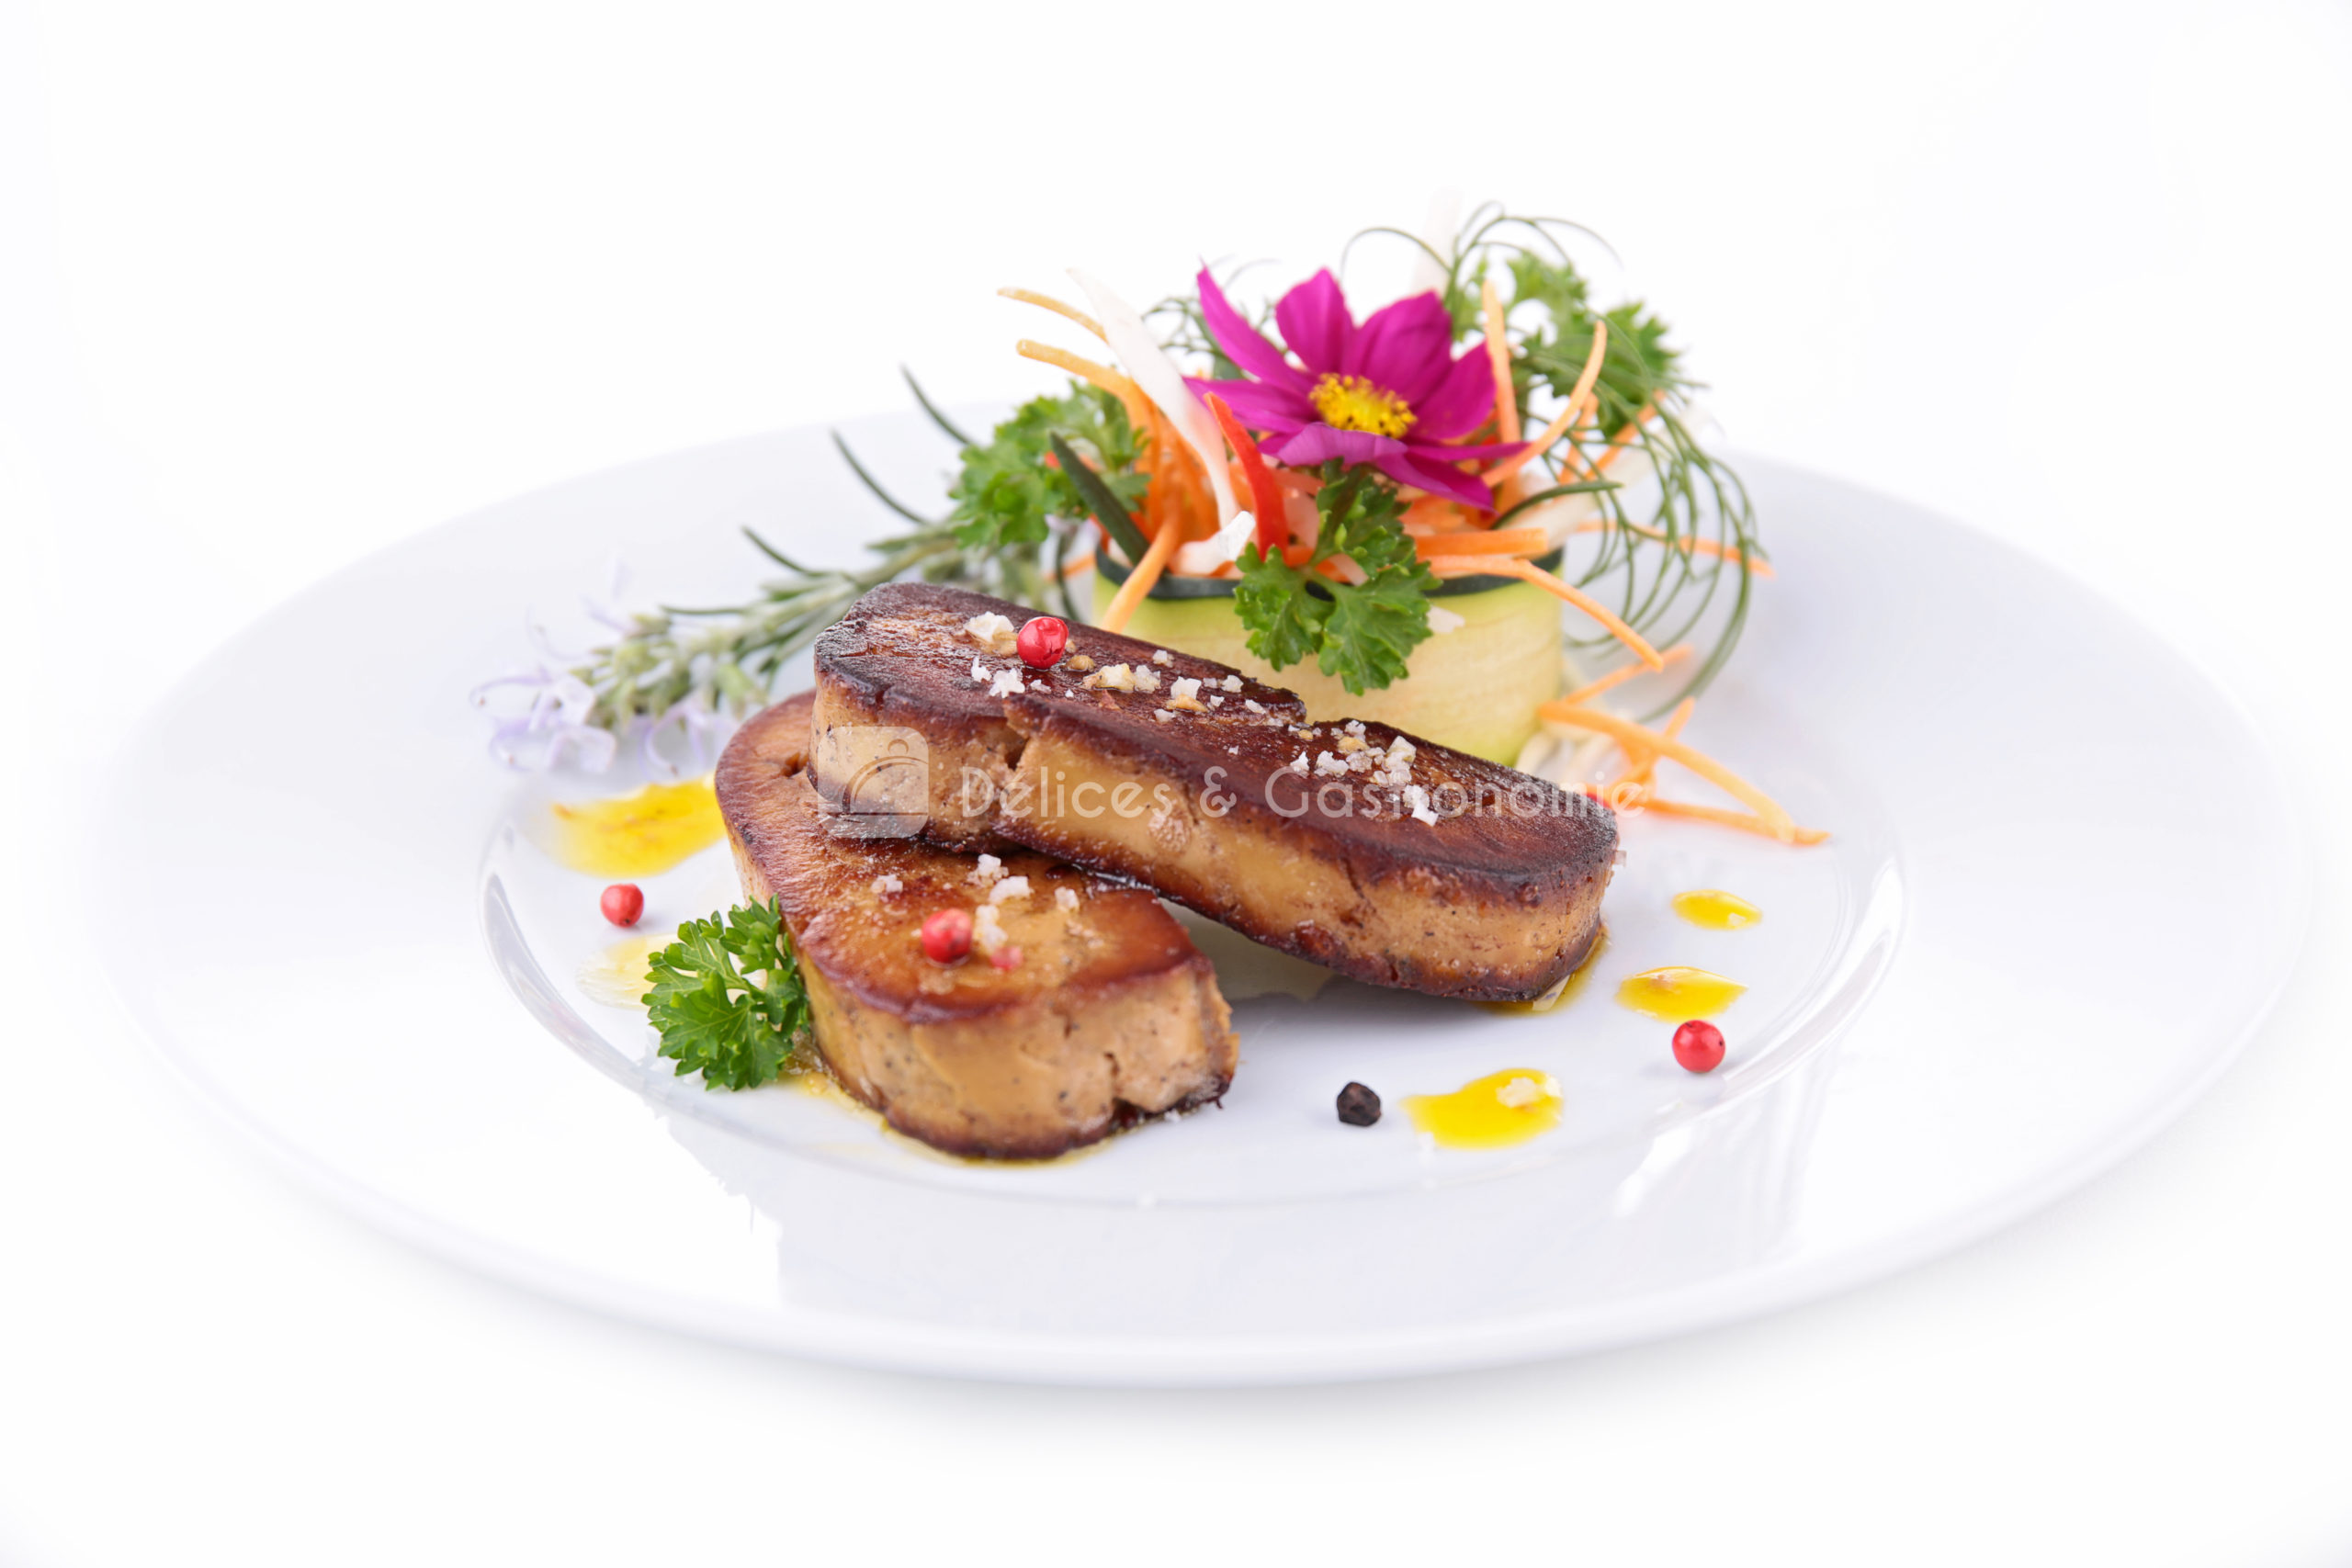 Escalope-foie-gras-de-canard-20500-BGB-Delices-Gastronomie-1-scaled